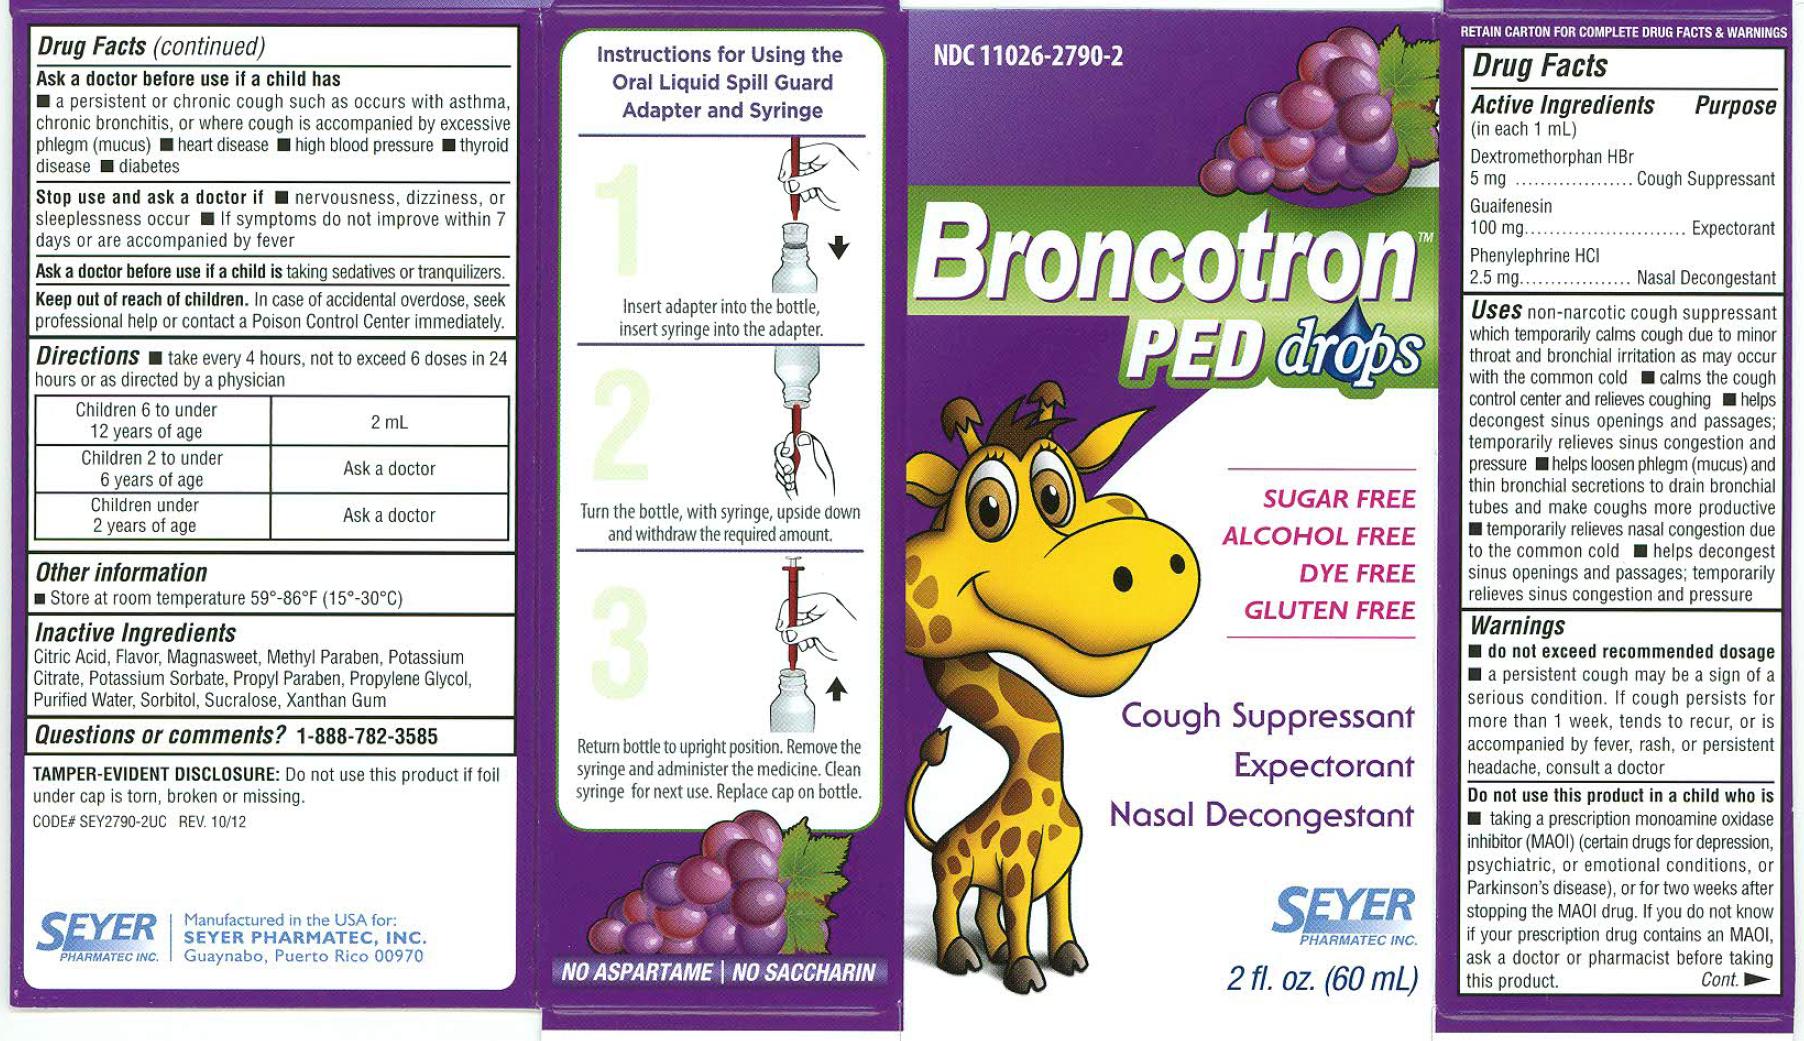 broncotronpeddrops